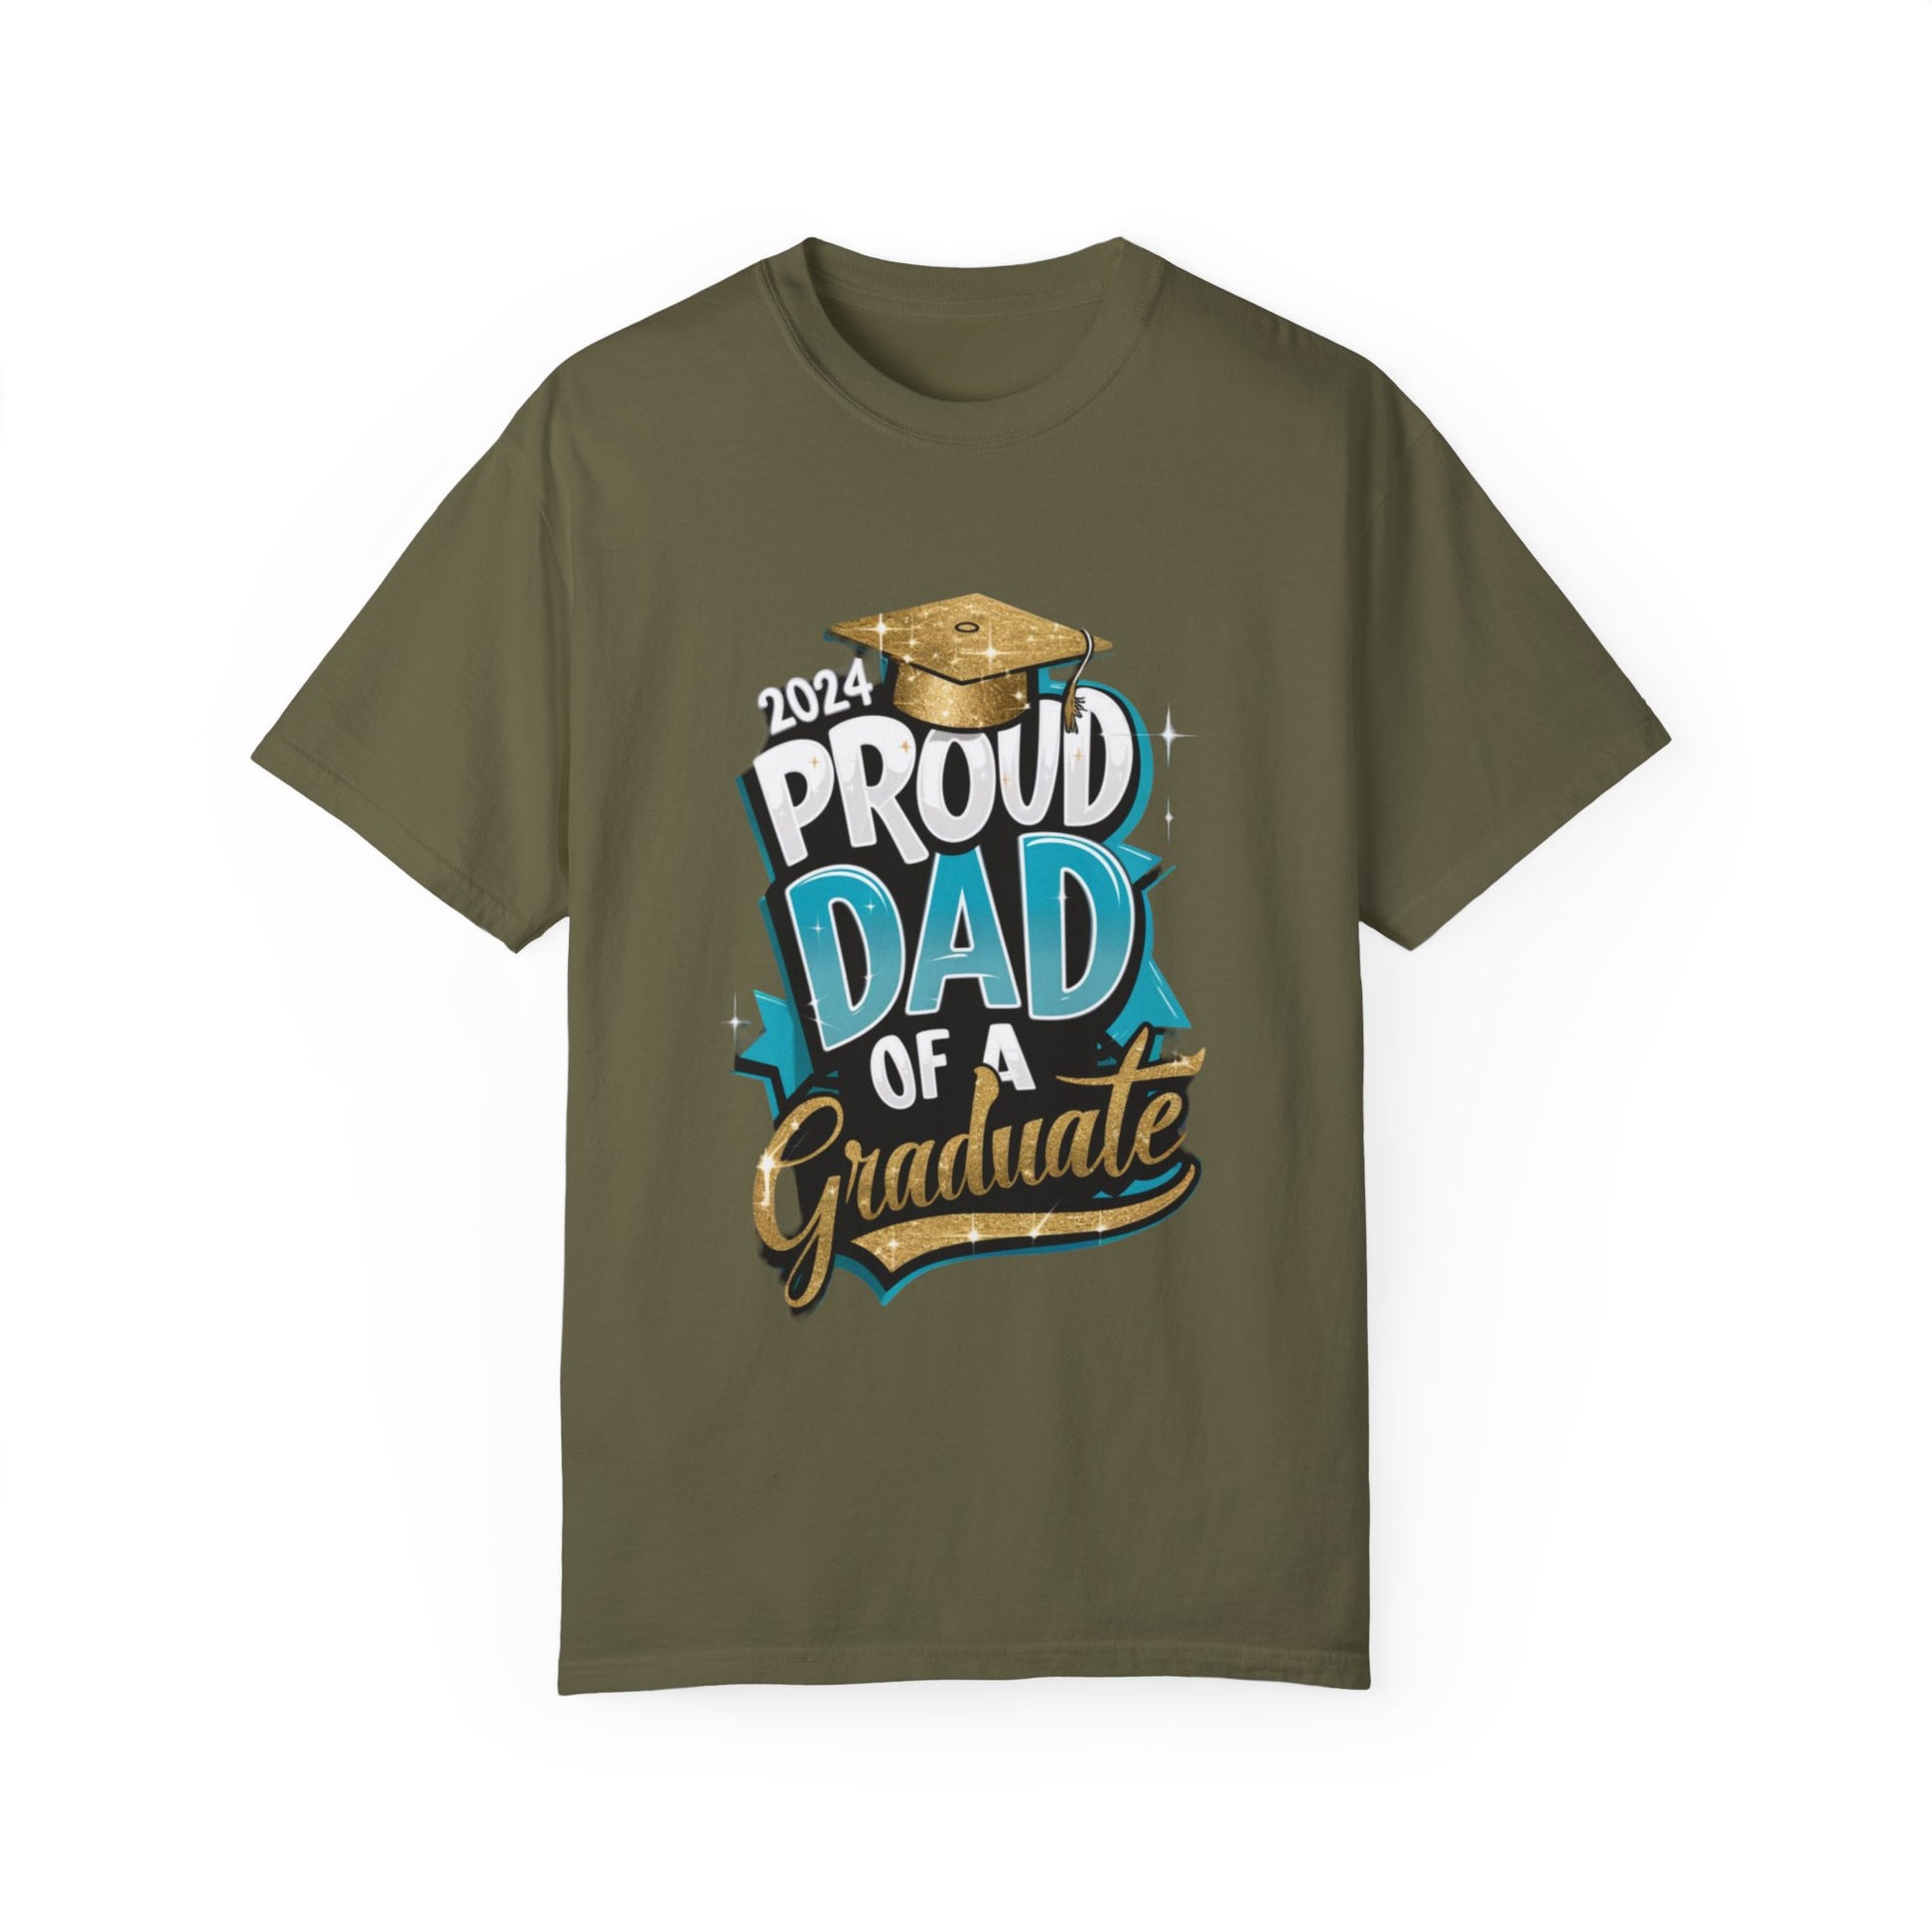 Proud Dad of a 2024 Graduate Unisex Garment-dyed T-shirt Cotton Funny Humorous Graphic Soft Premium Unisex Men Women Sage T-shirt Birthday Gift-13